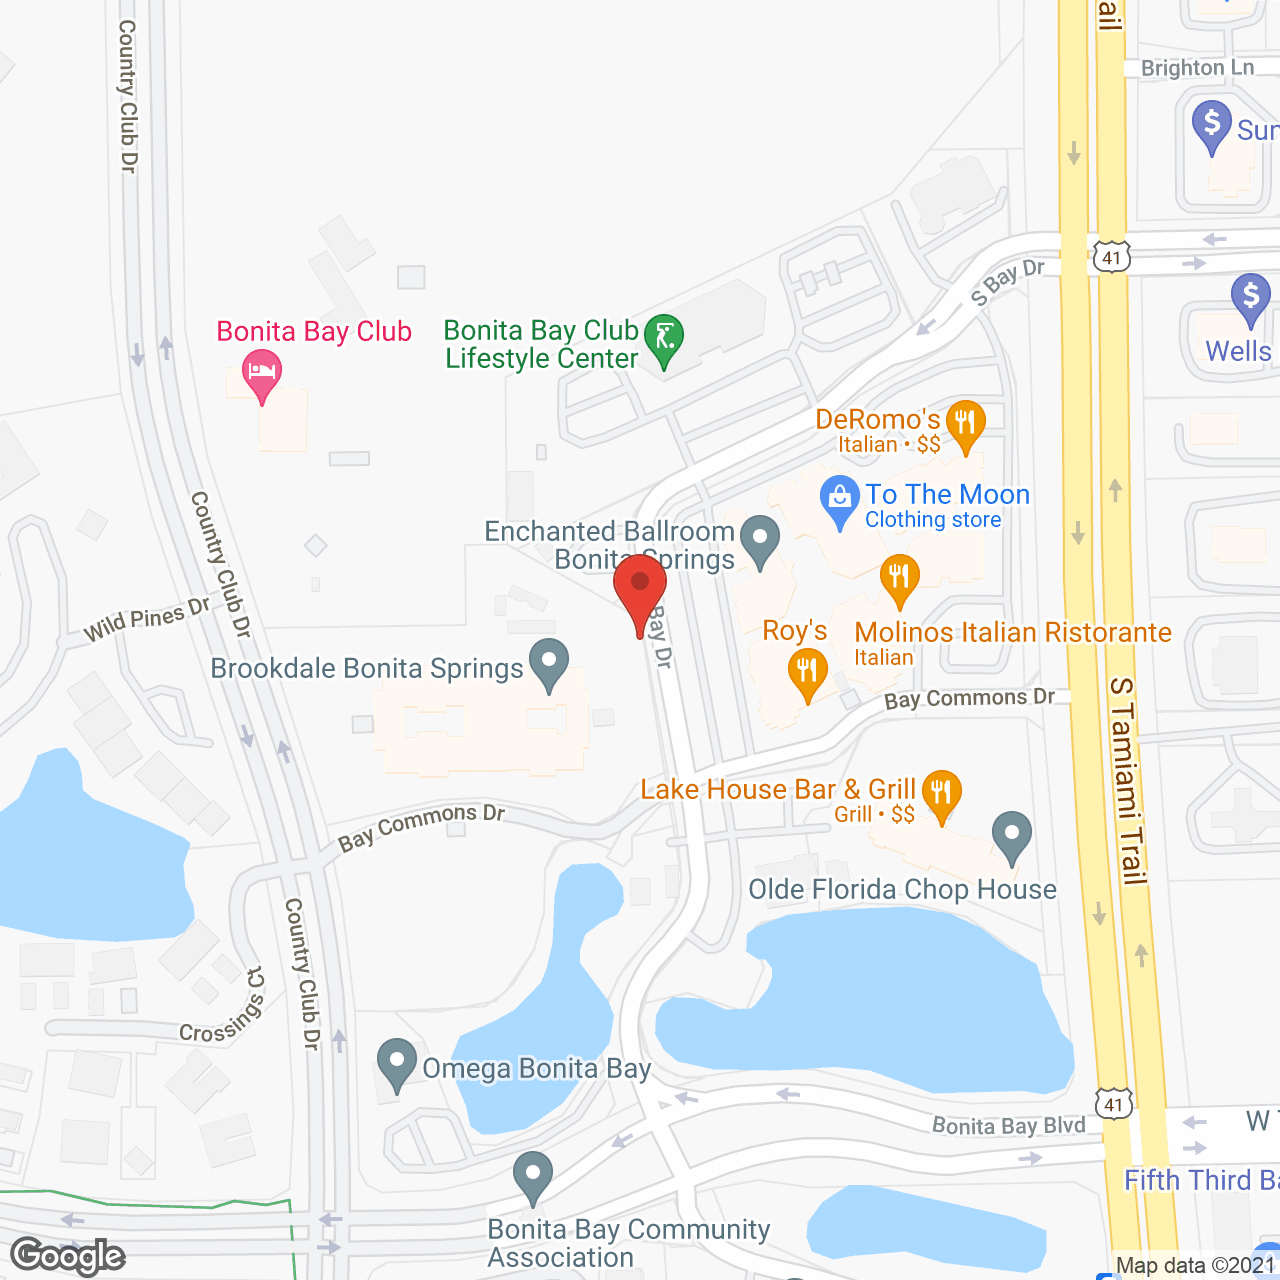 Brookdale Bonita Springs in google map